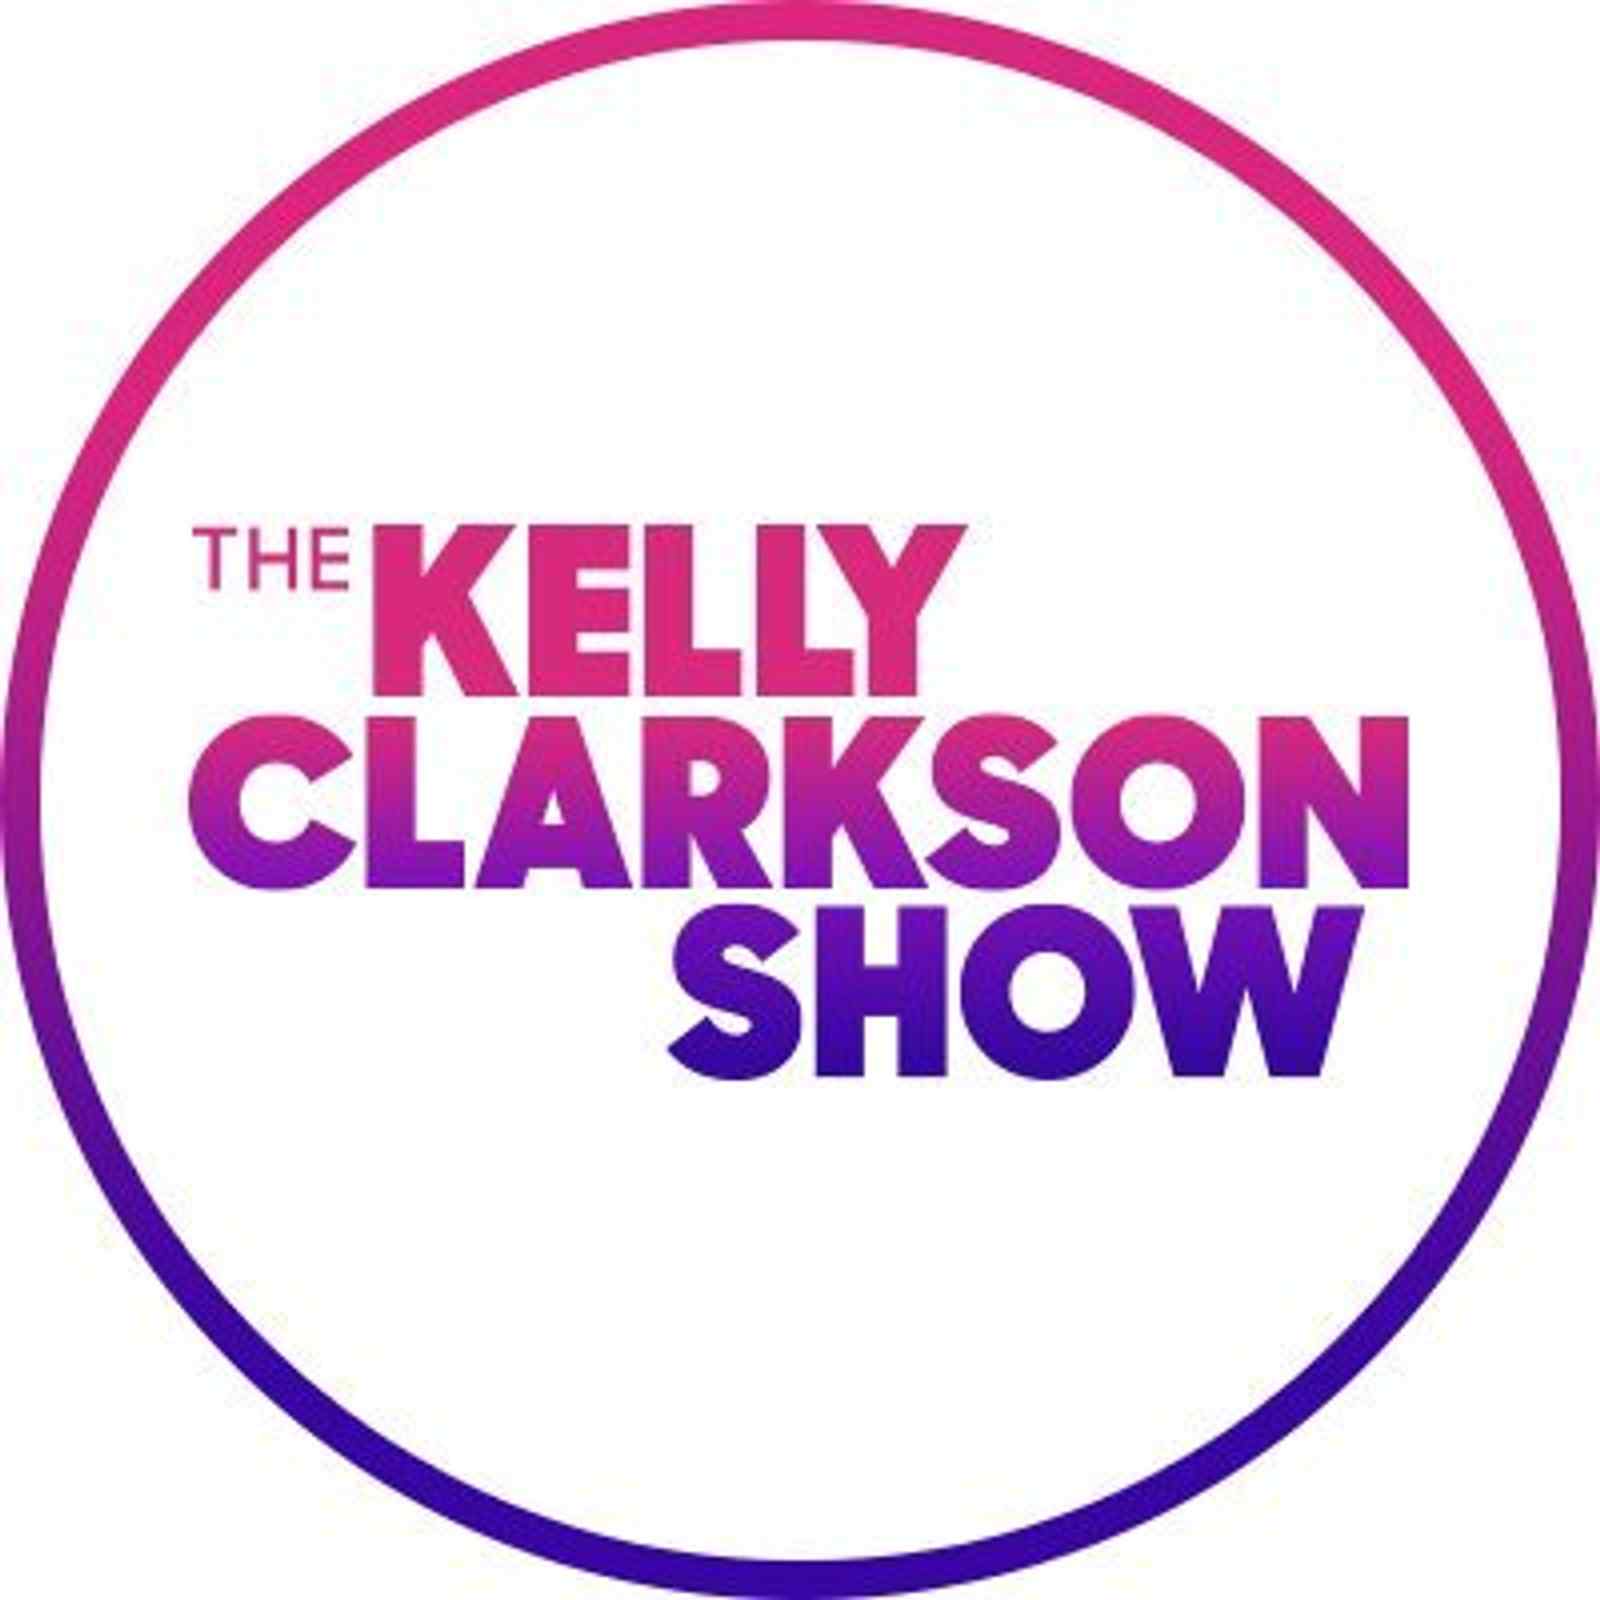 The Kelly Clarkson Show: Bobby Bones